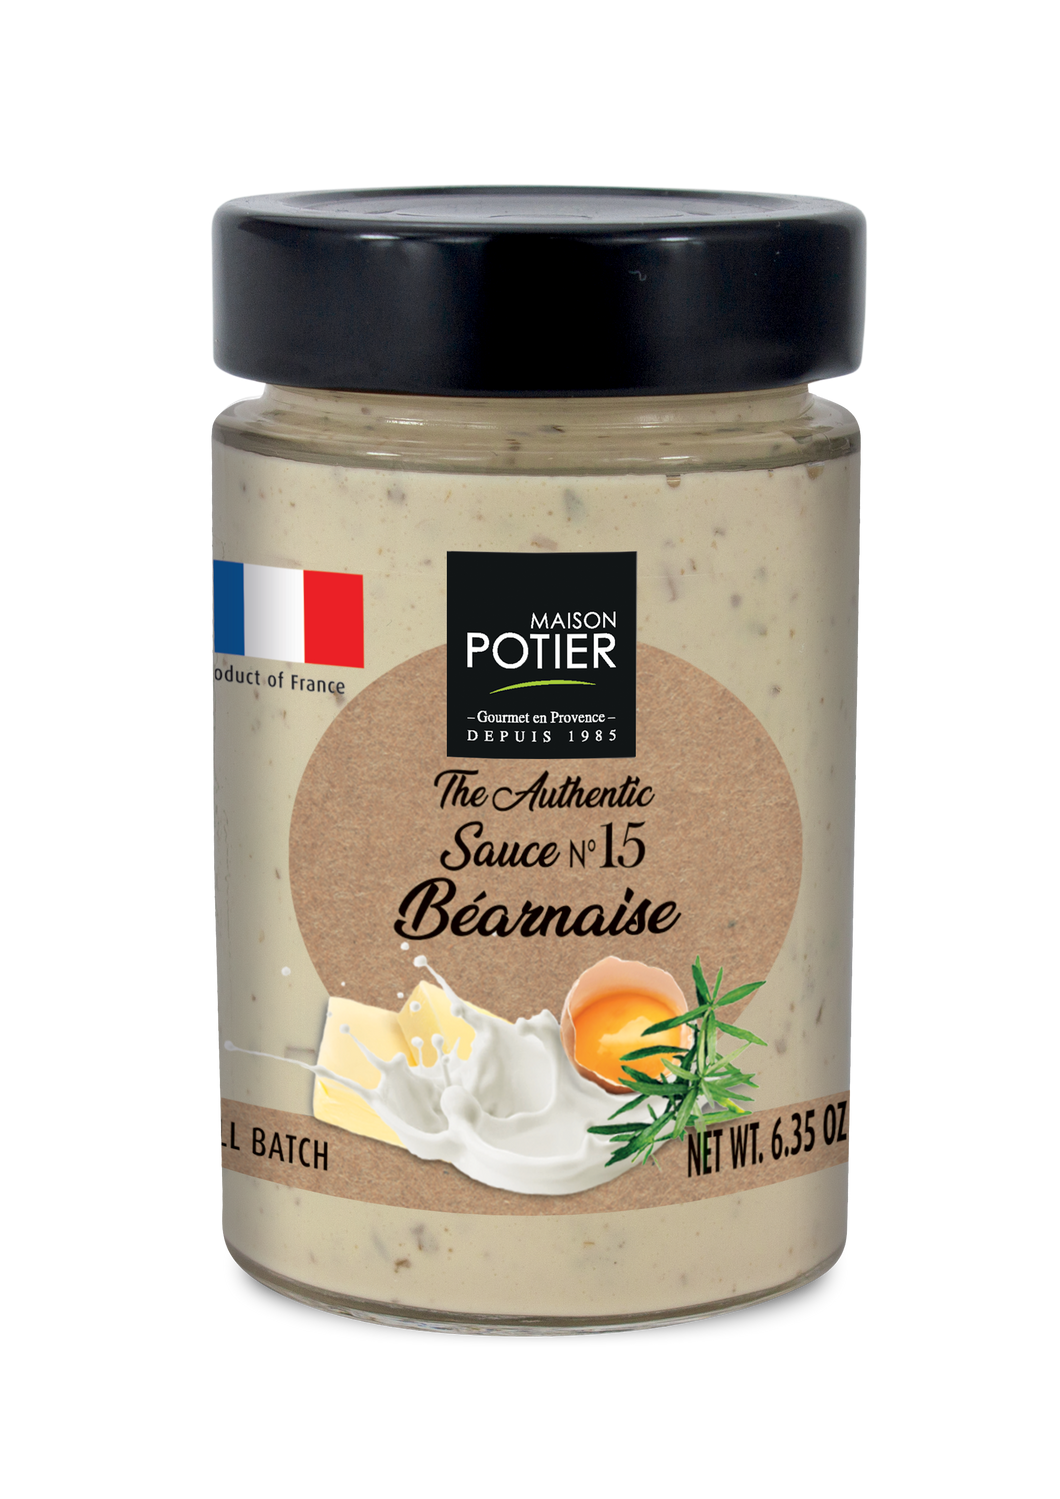 Maison Potier Bearnaise Sauce, The Authentic Sauce N. 15, 6.35oz Jar - International Loft